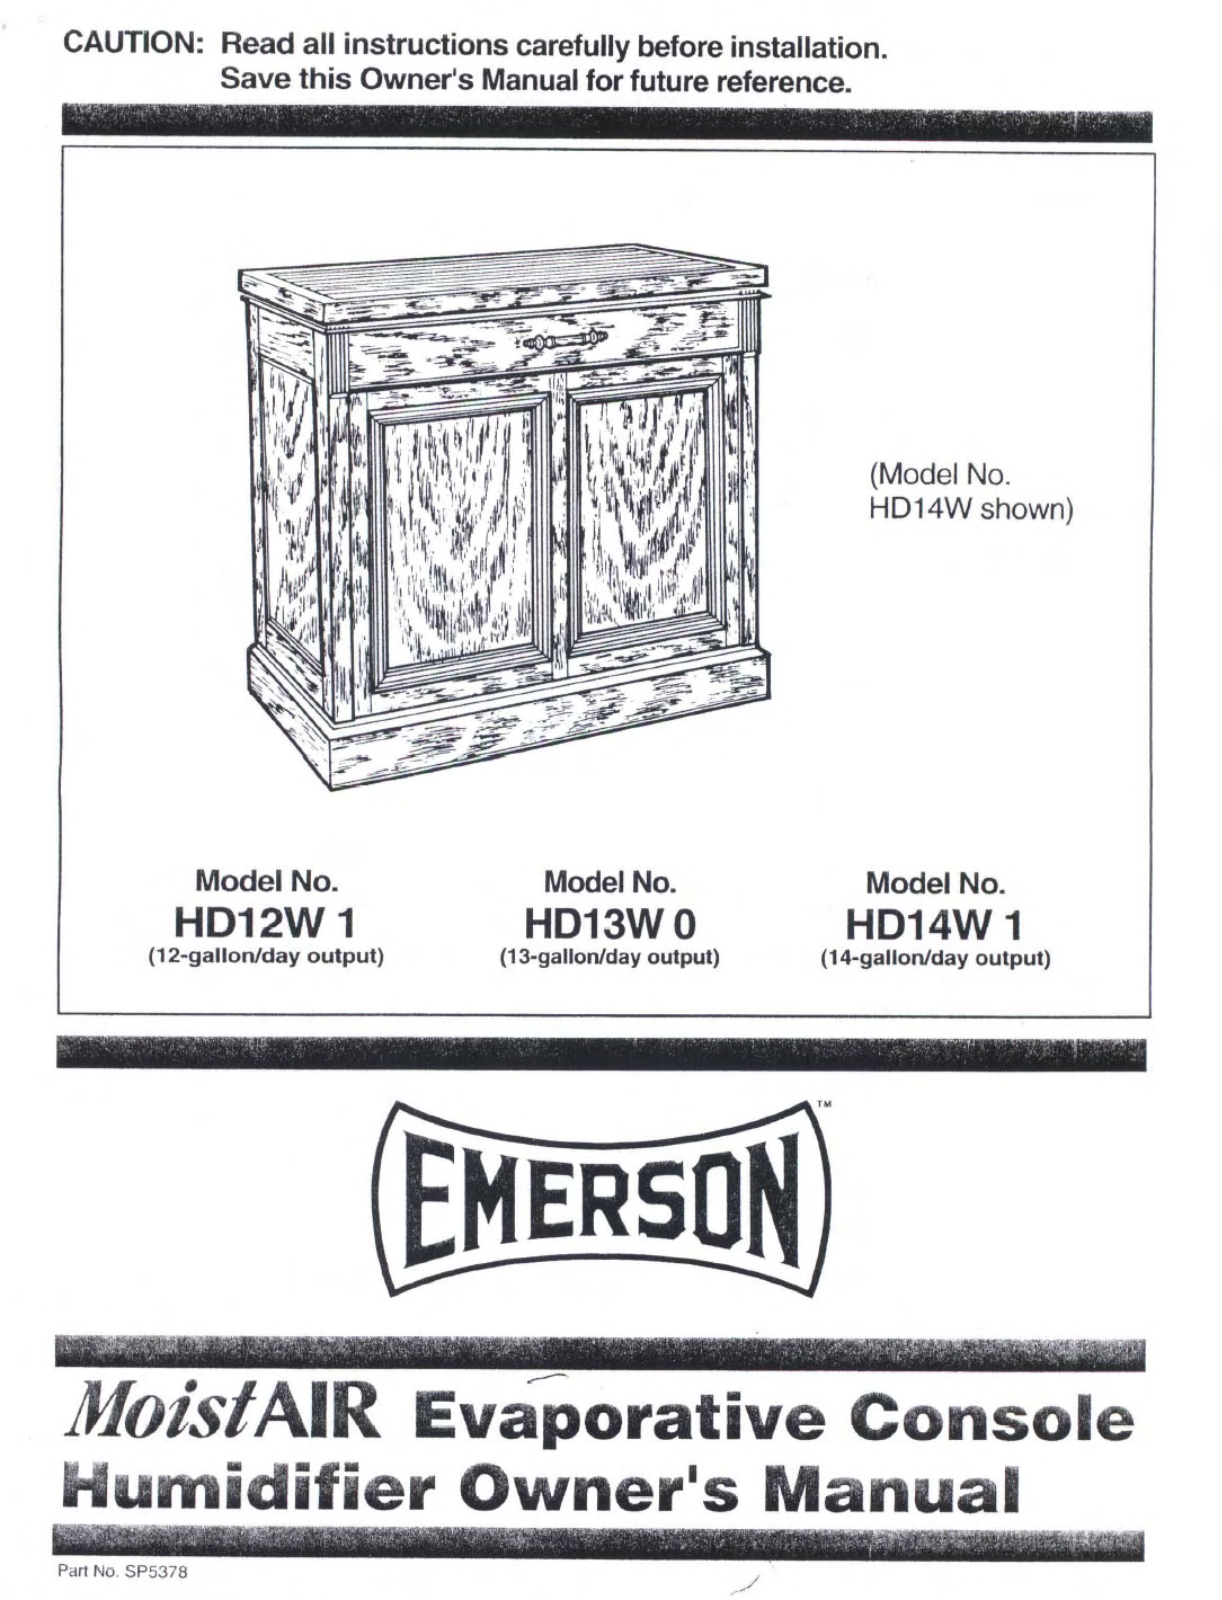 Emerson Hd12w1, Hd14w1, Hd13w0 Owner's Manual